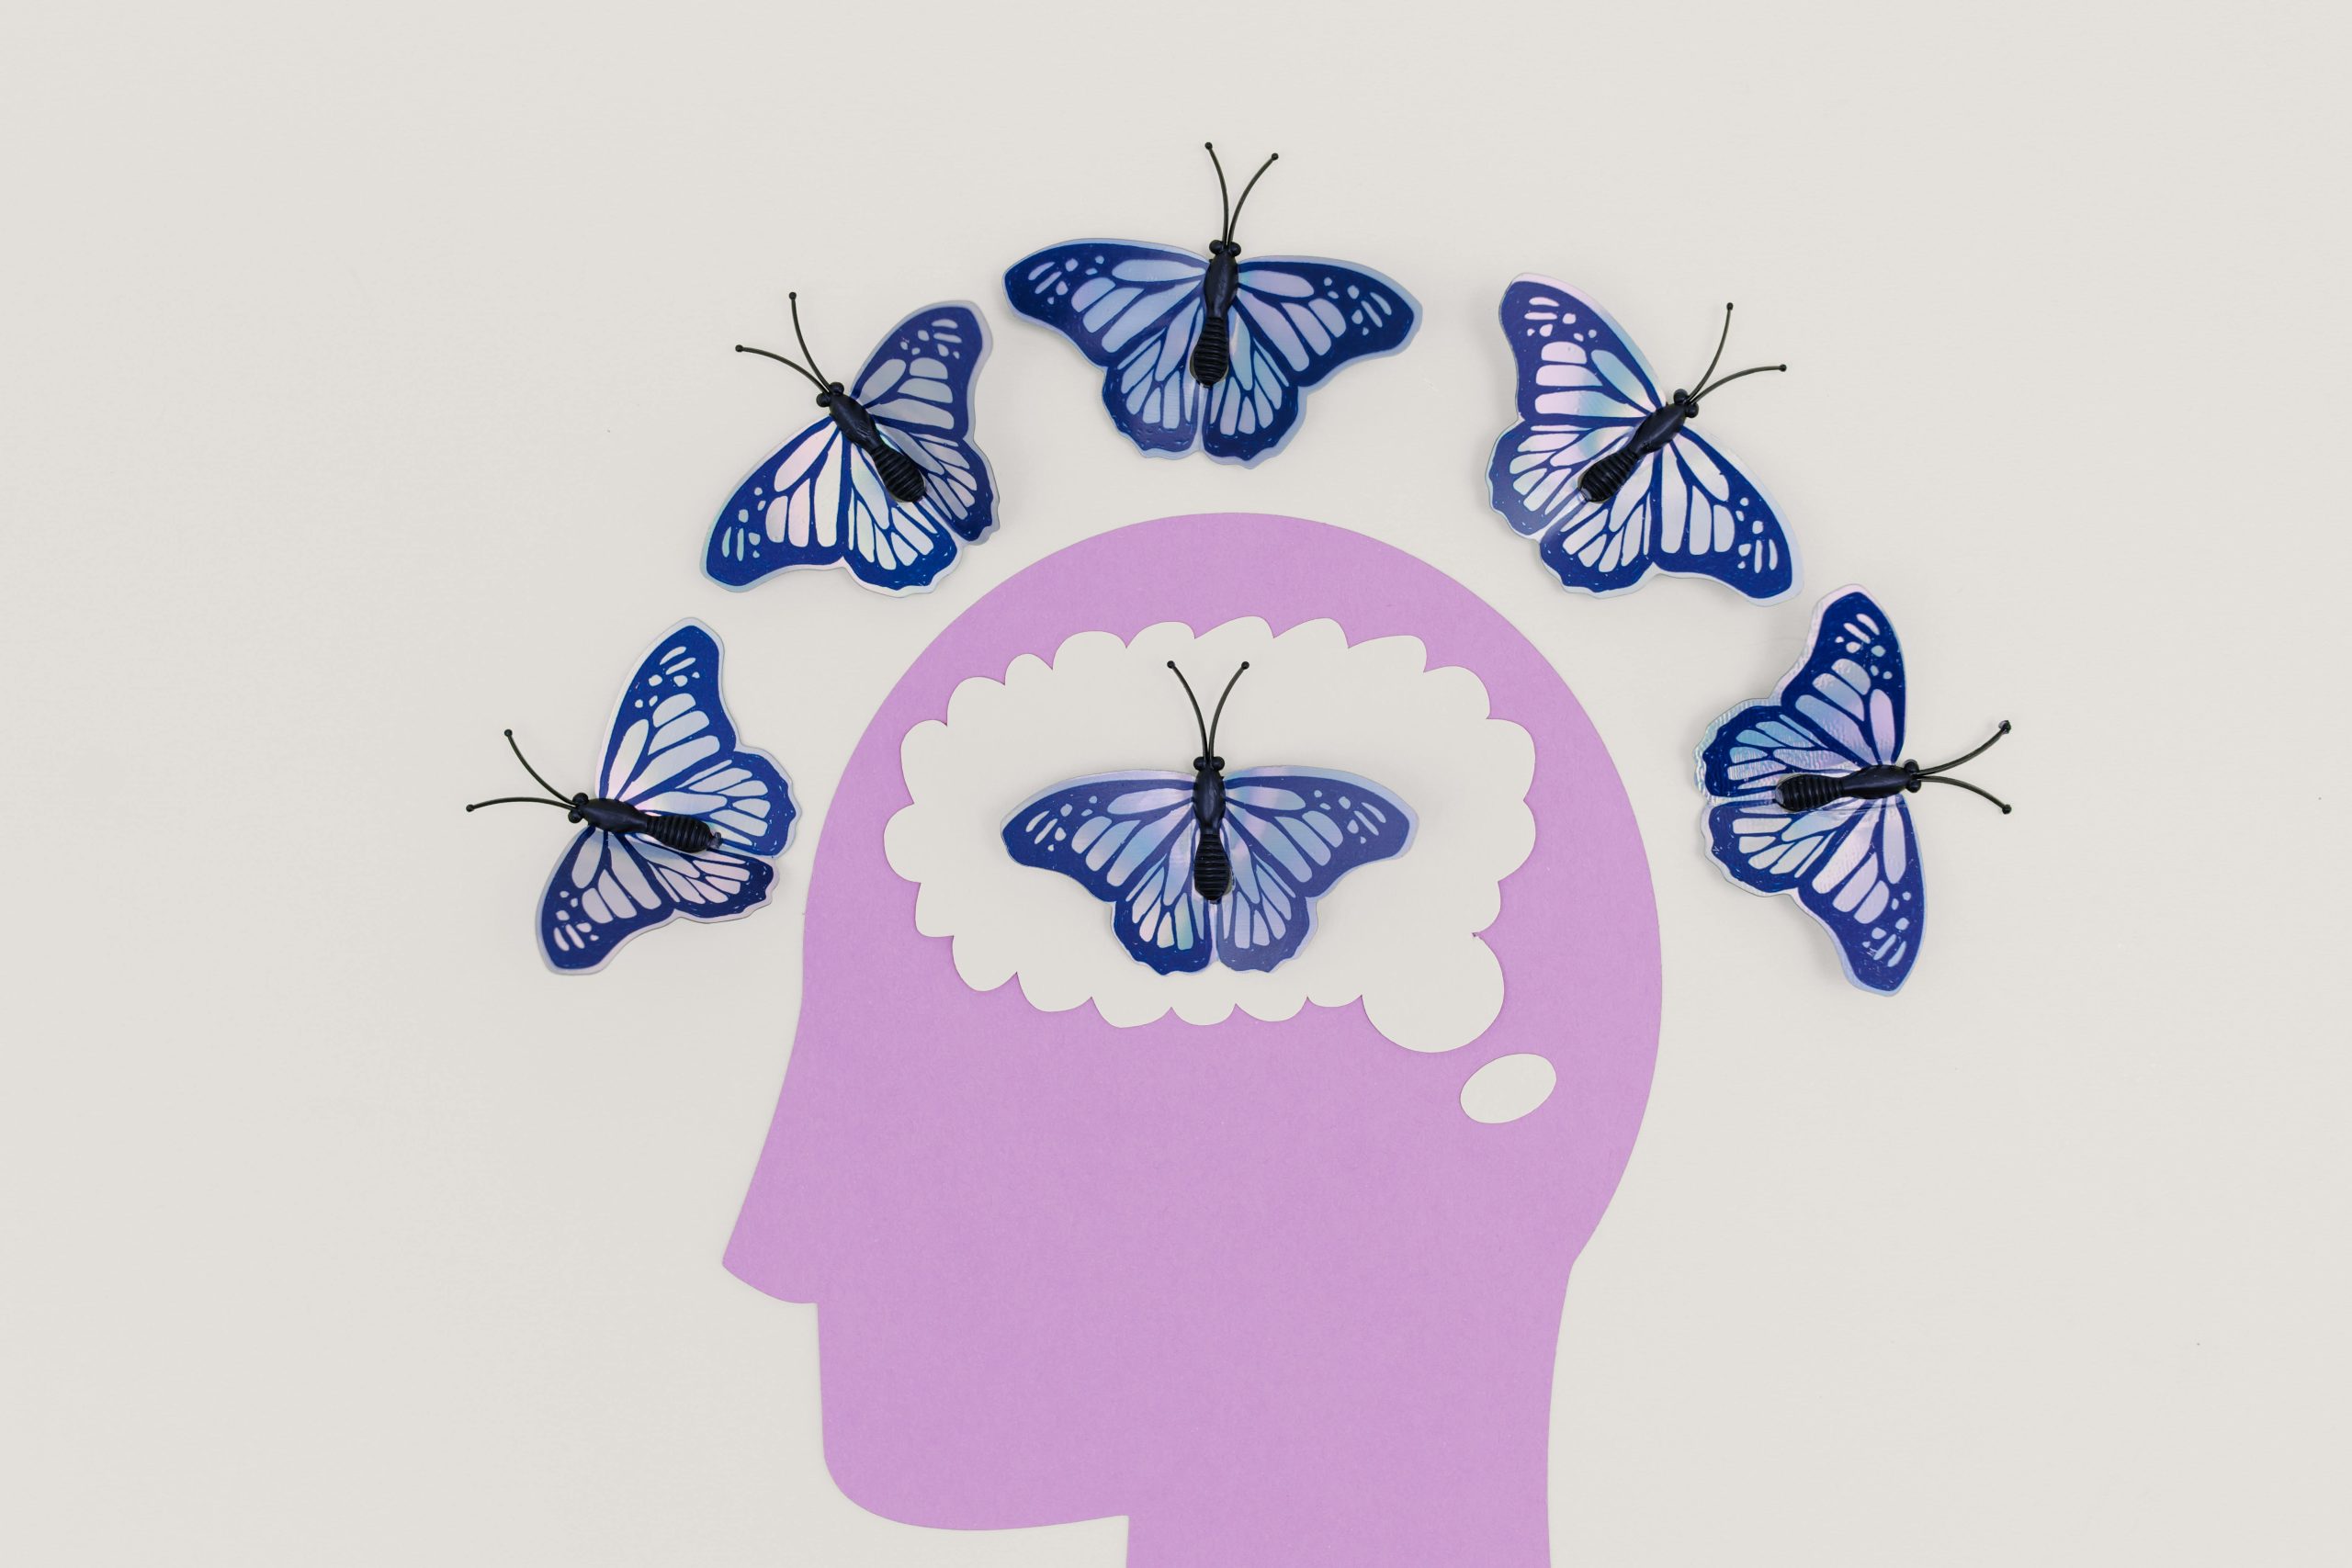 Misli, glava, mozak i leptirići